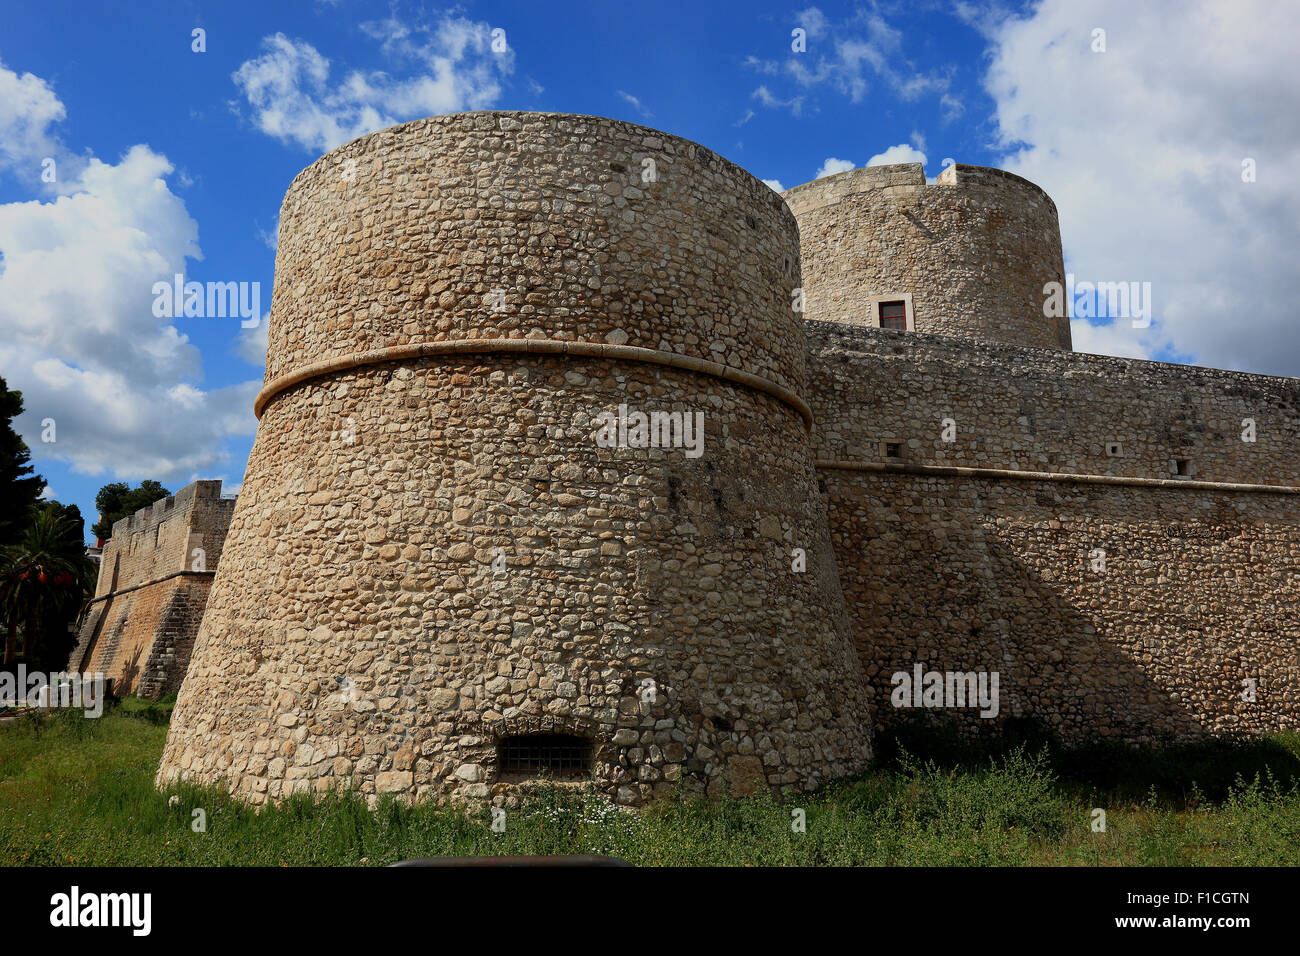 the castle Castel of Manfredonia, Apulia, Italy Stock Photo